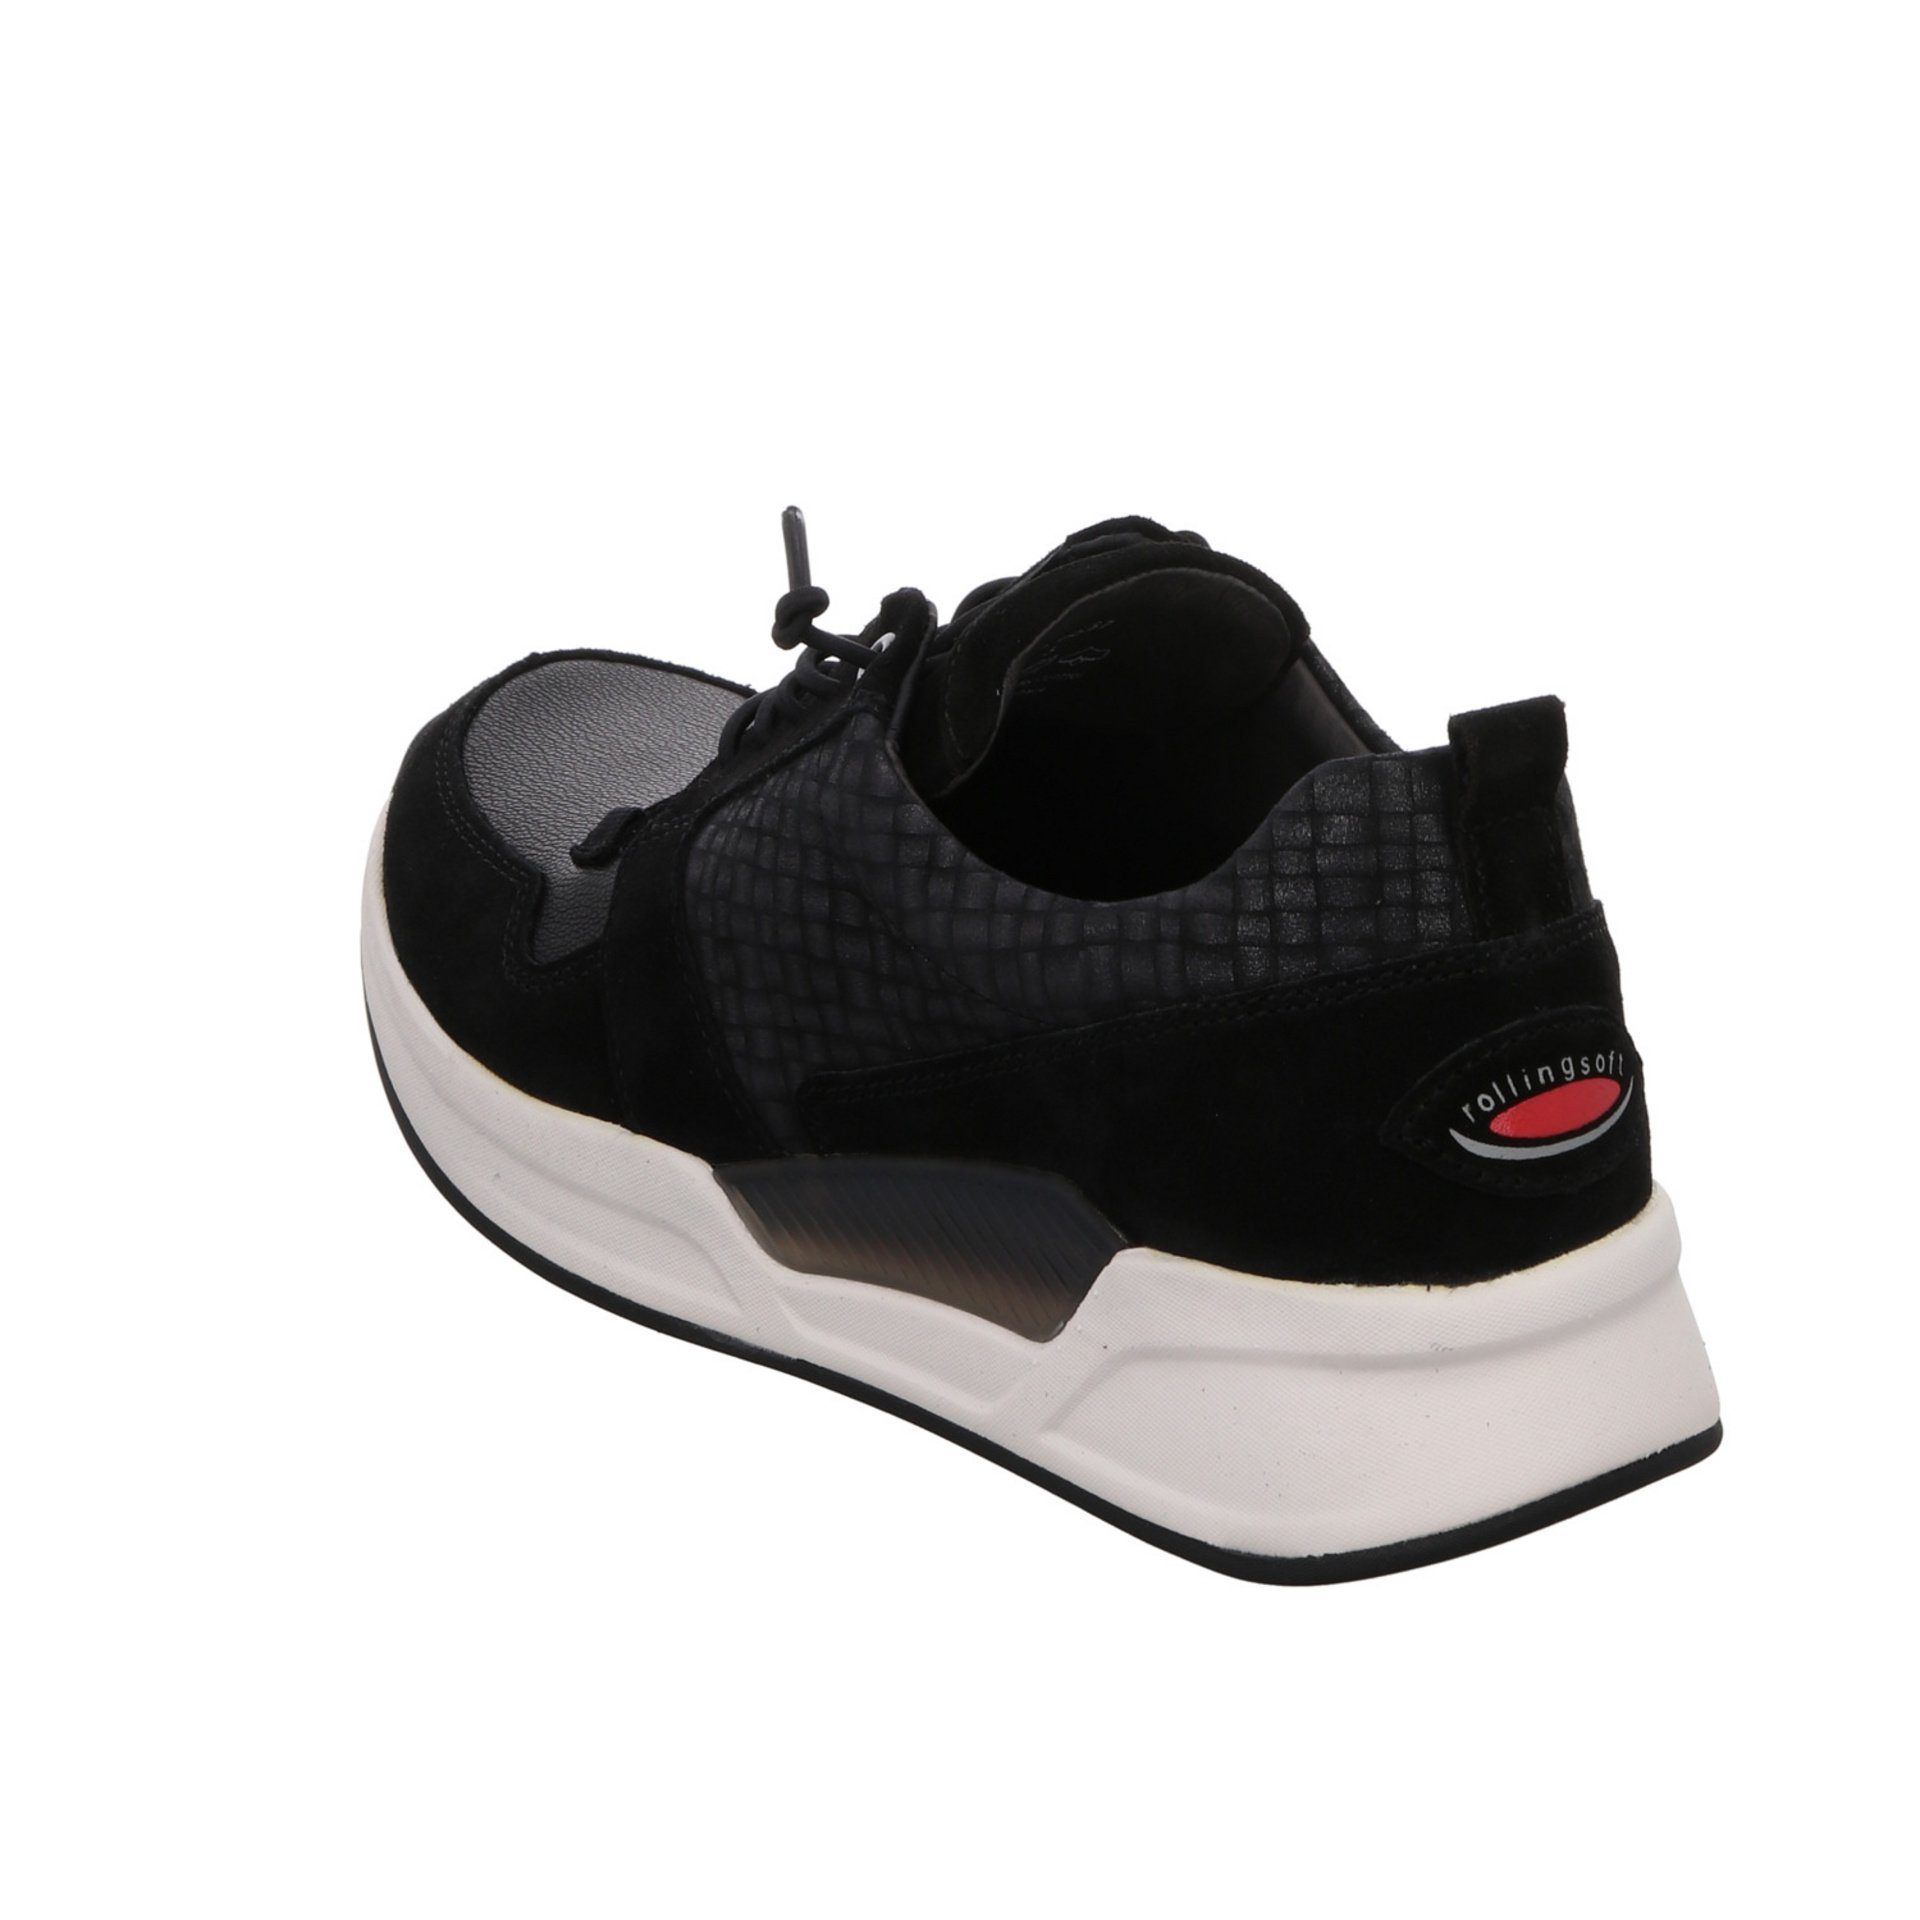 Gabor 87 Sneaker / Schuhe schwarz Lederkombination Rollingsoft Sneaker Schnürschuh Damen